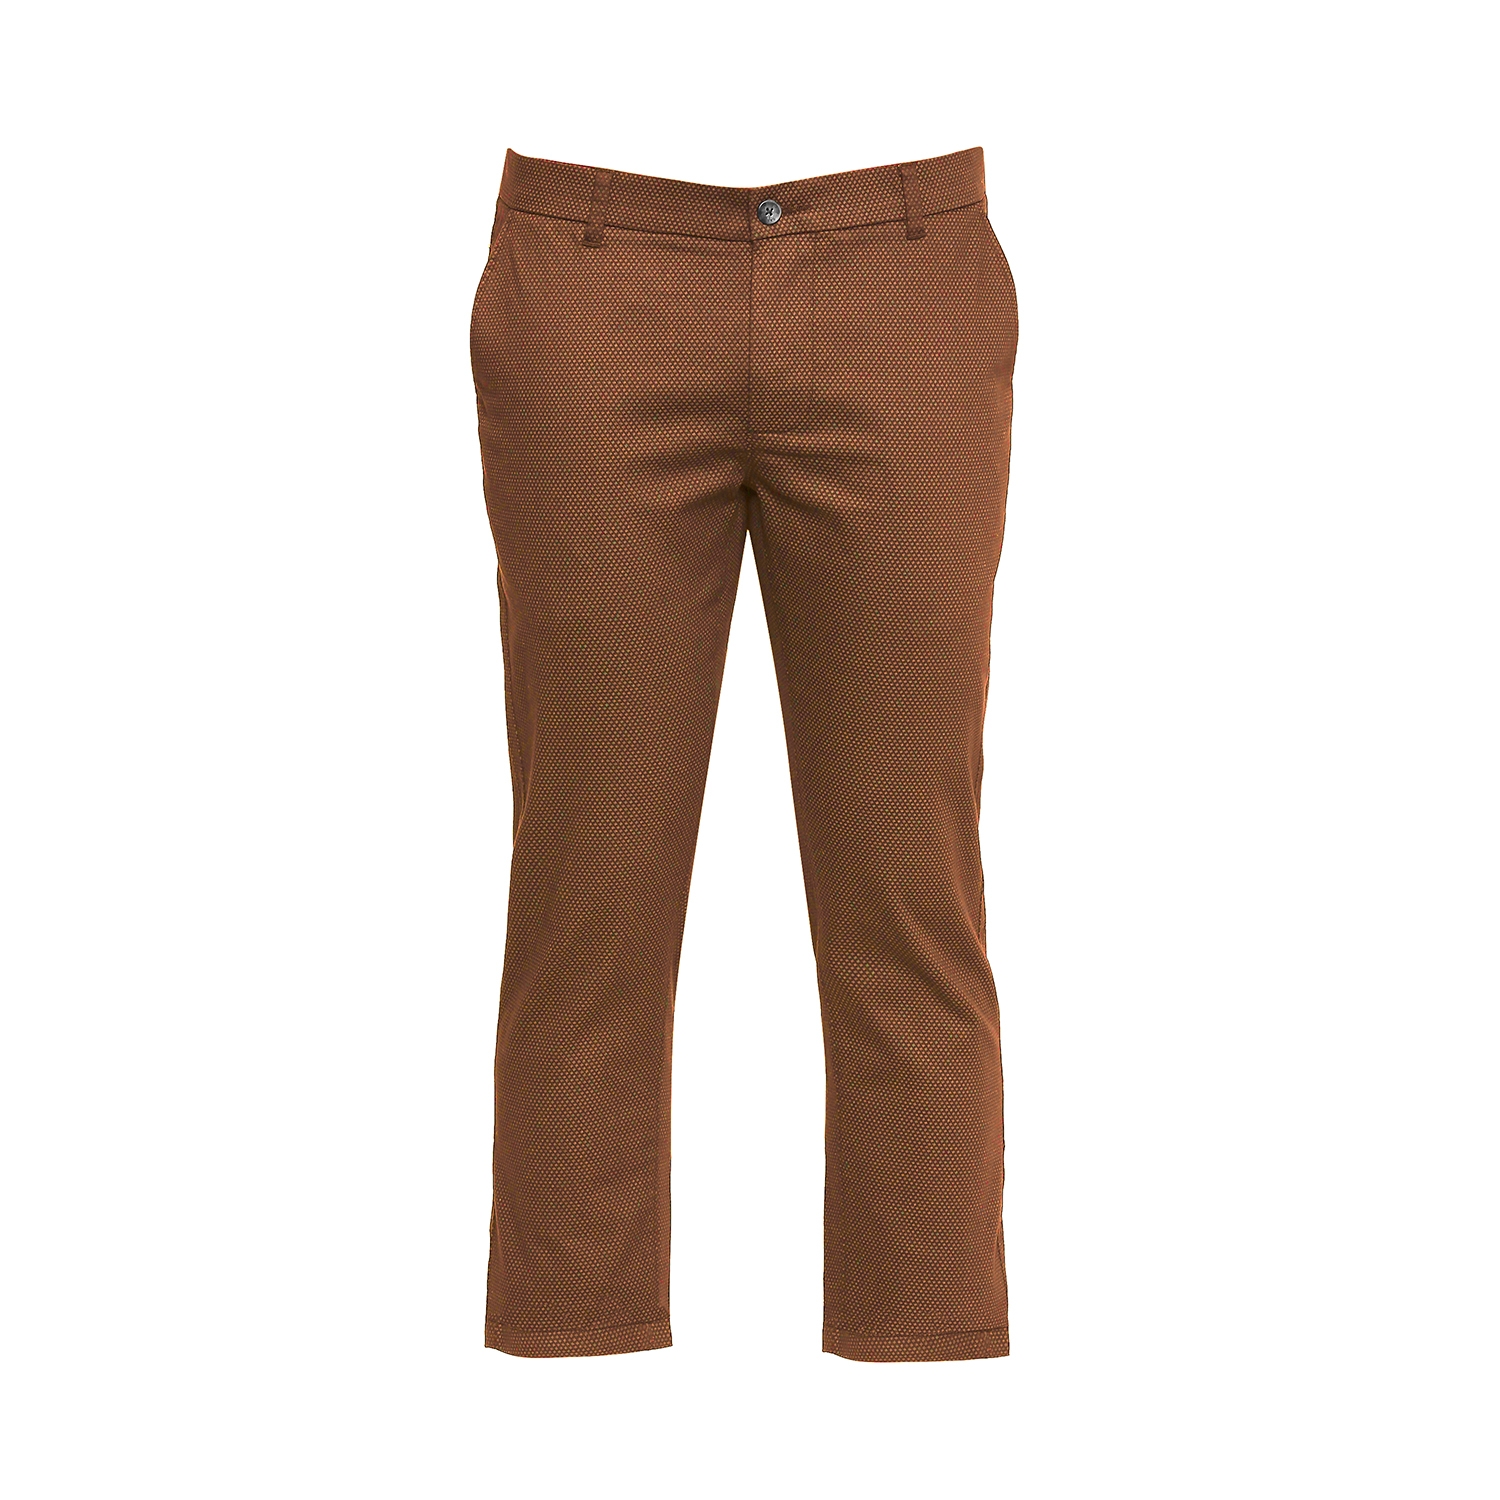 Basics | Men's Khaki Cotton Blend Printed Trouser 5